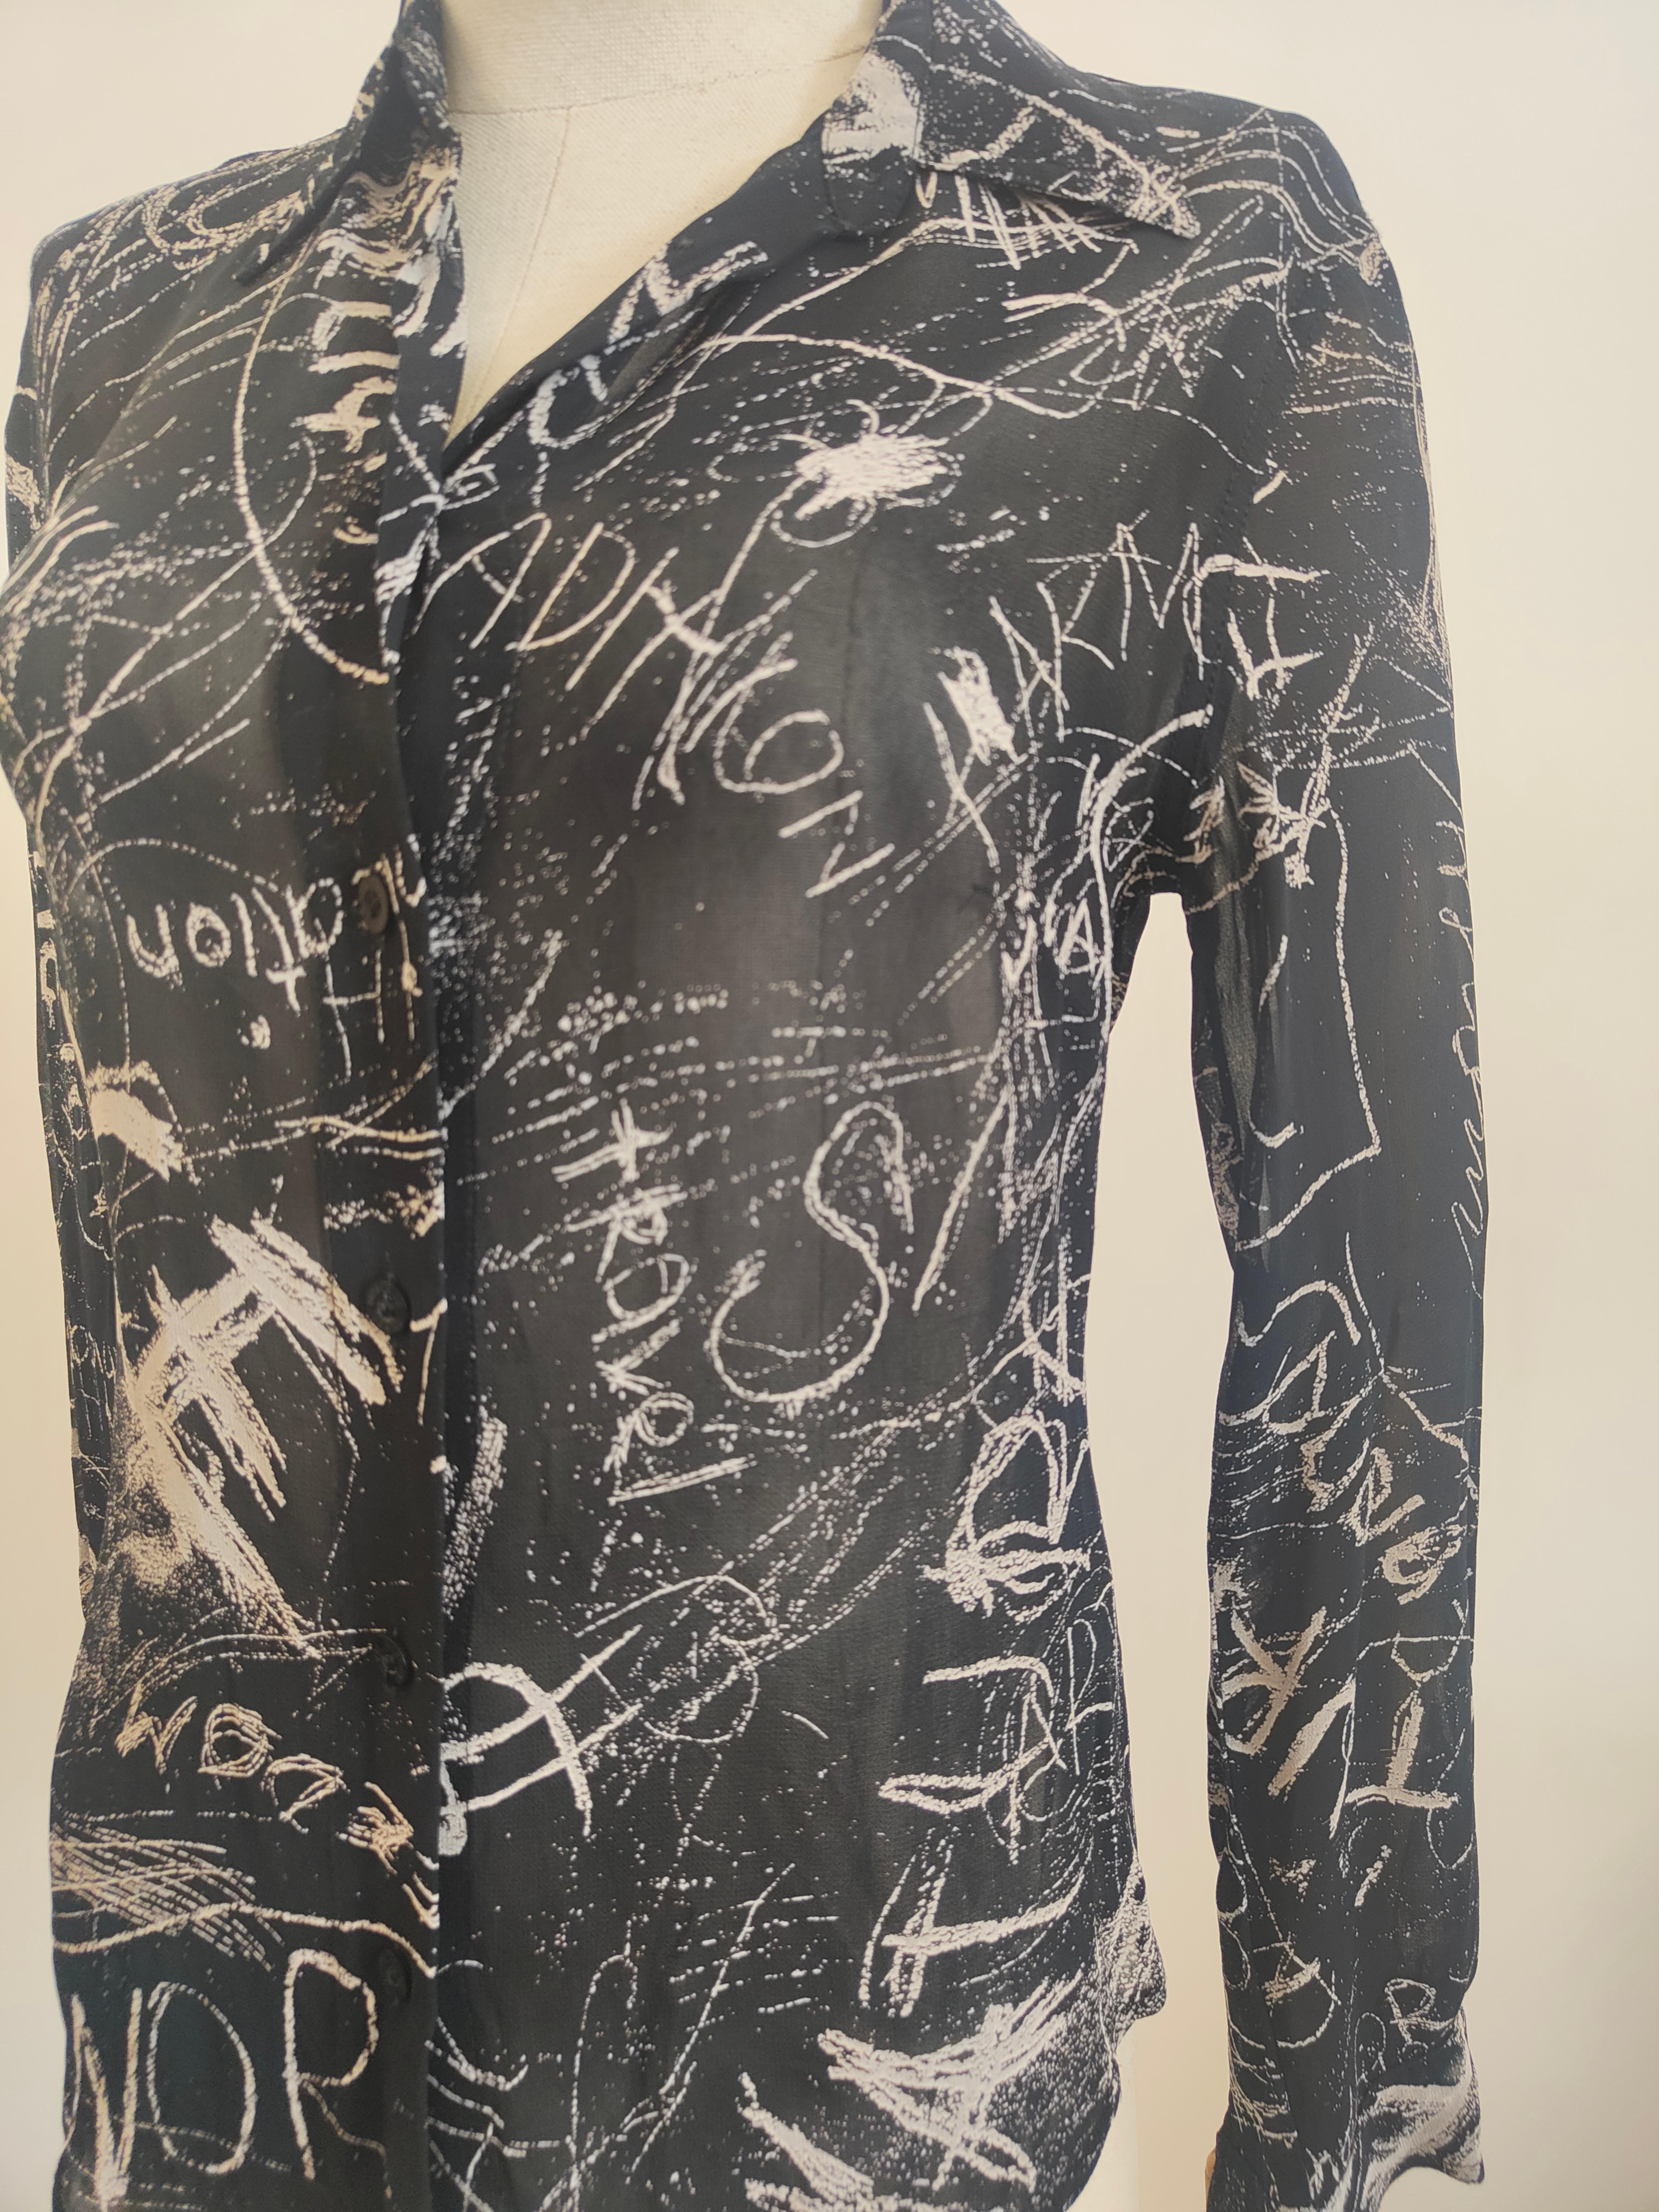 Moschino see through graffiti shirt For Sale 2